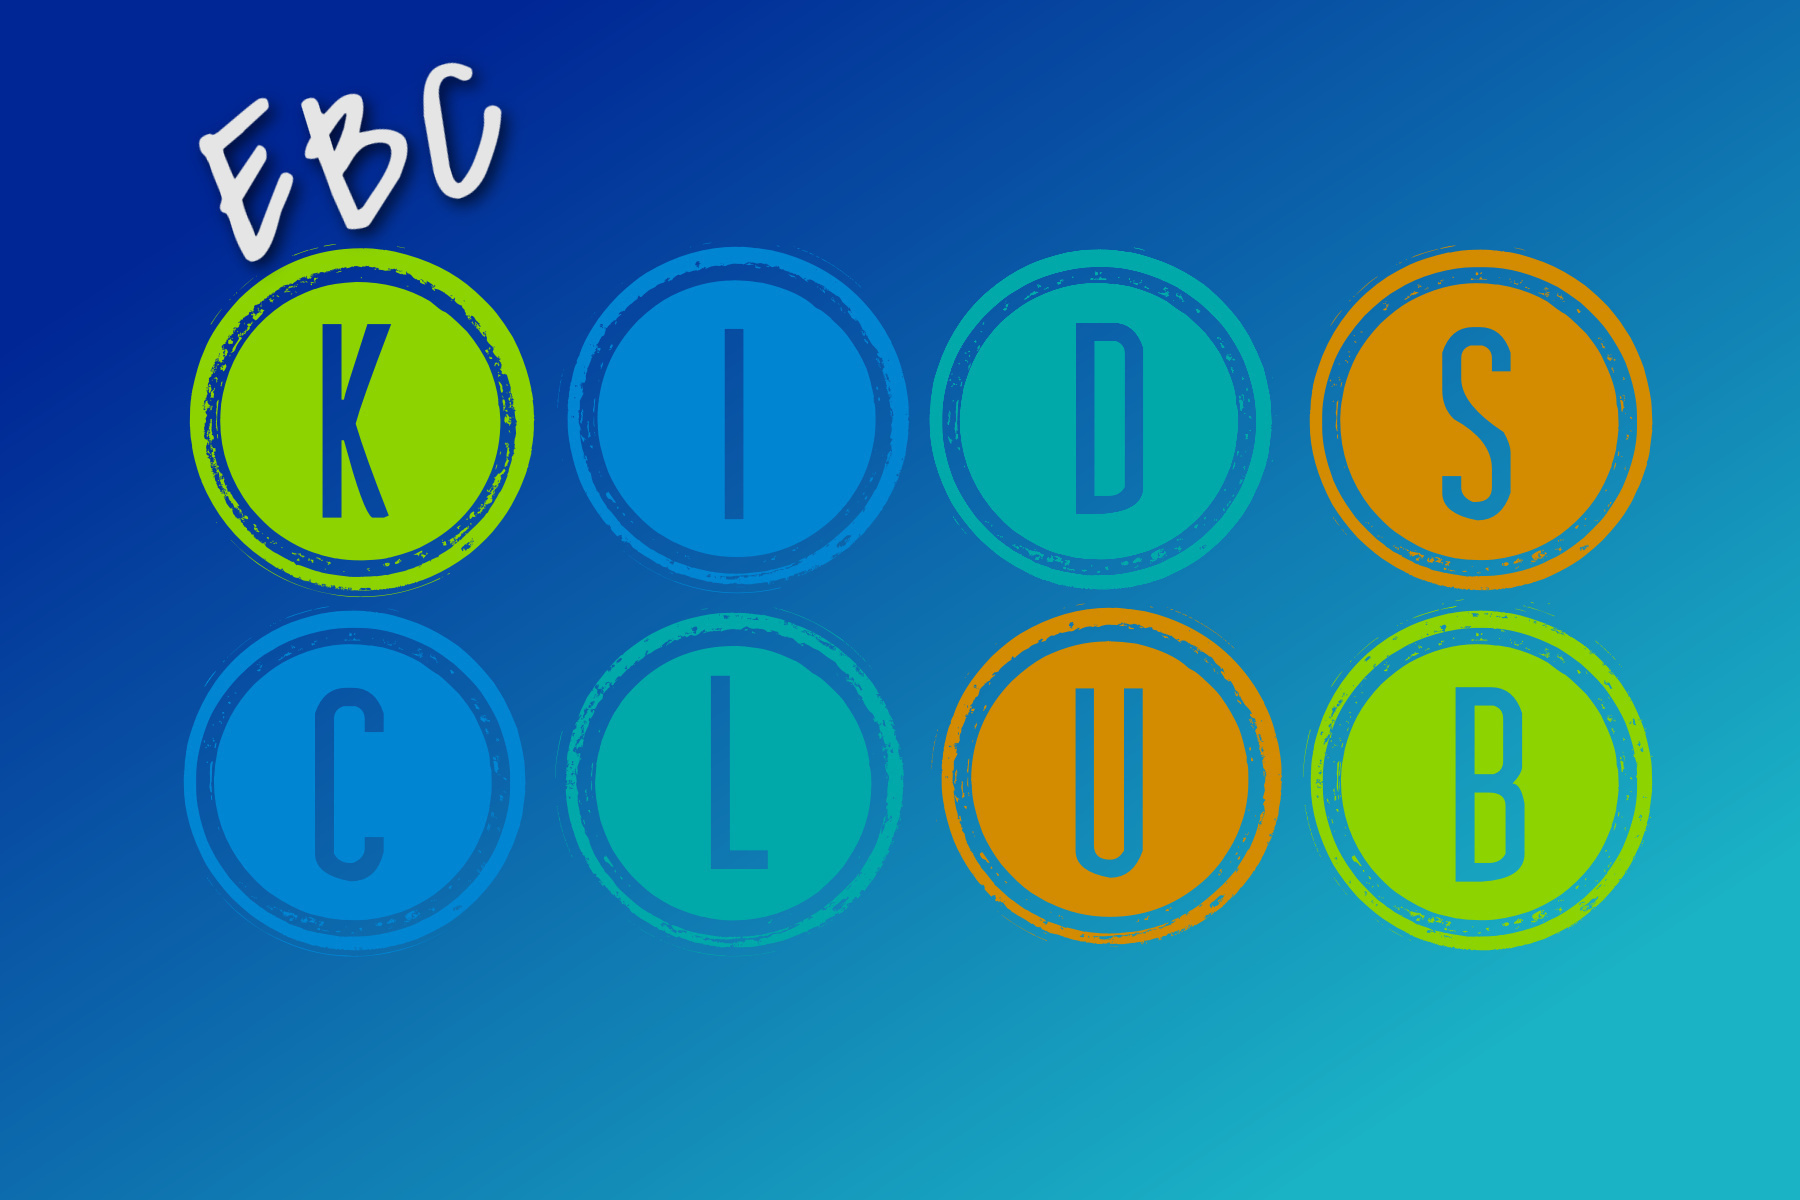 EBC Kids Club